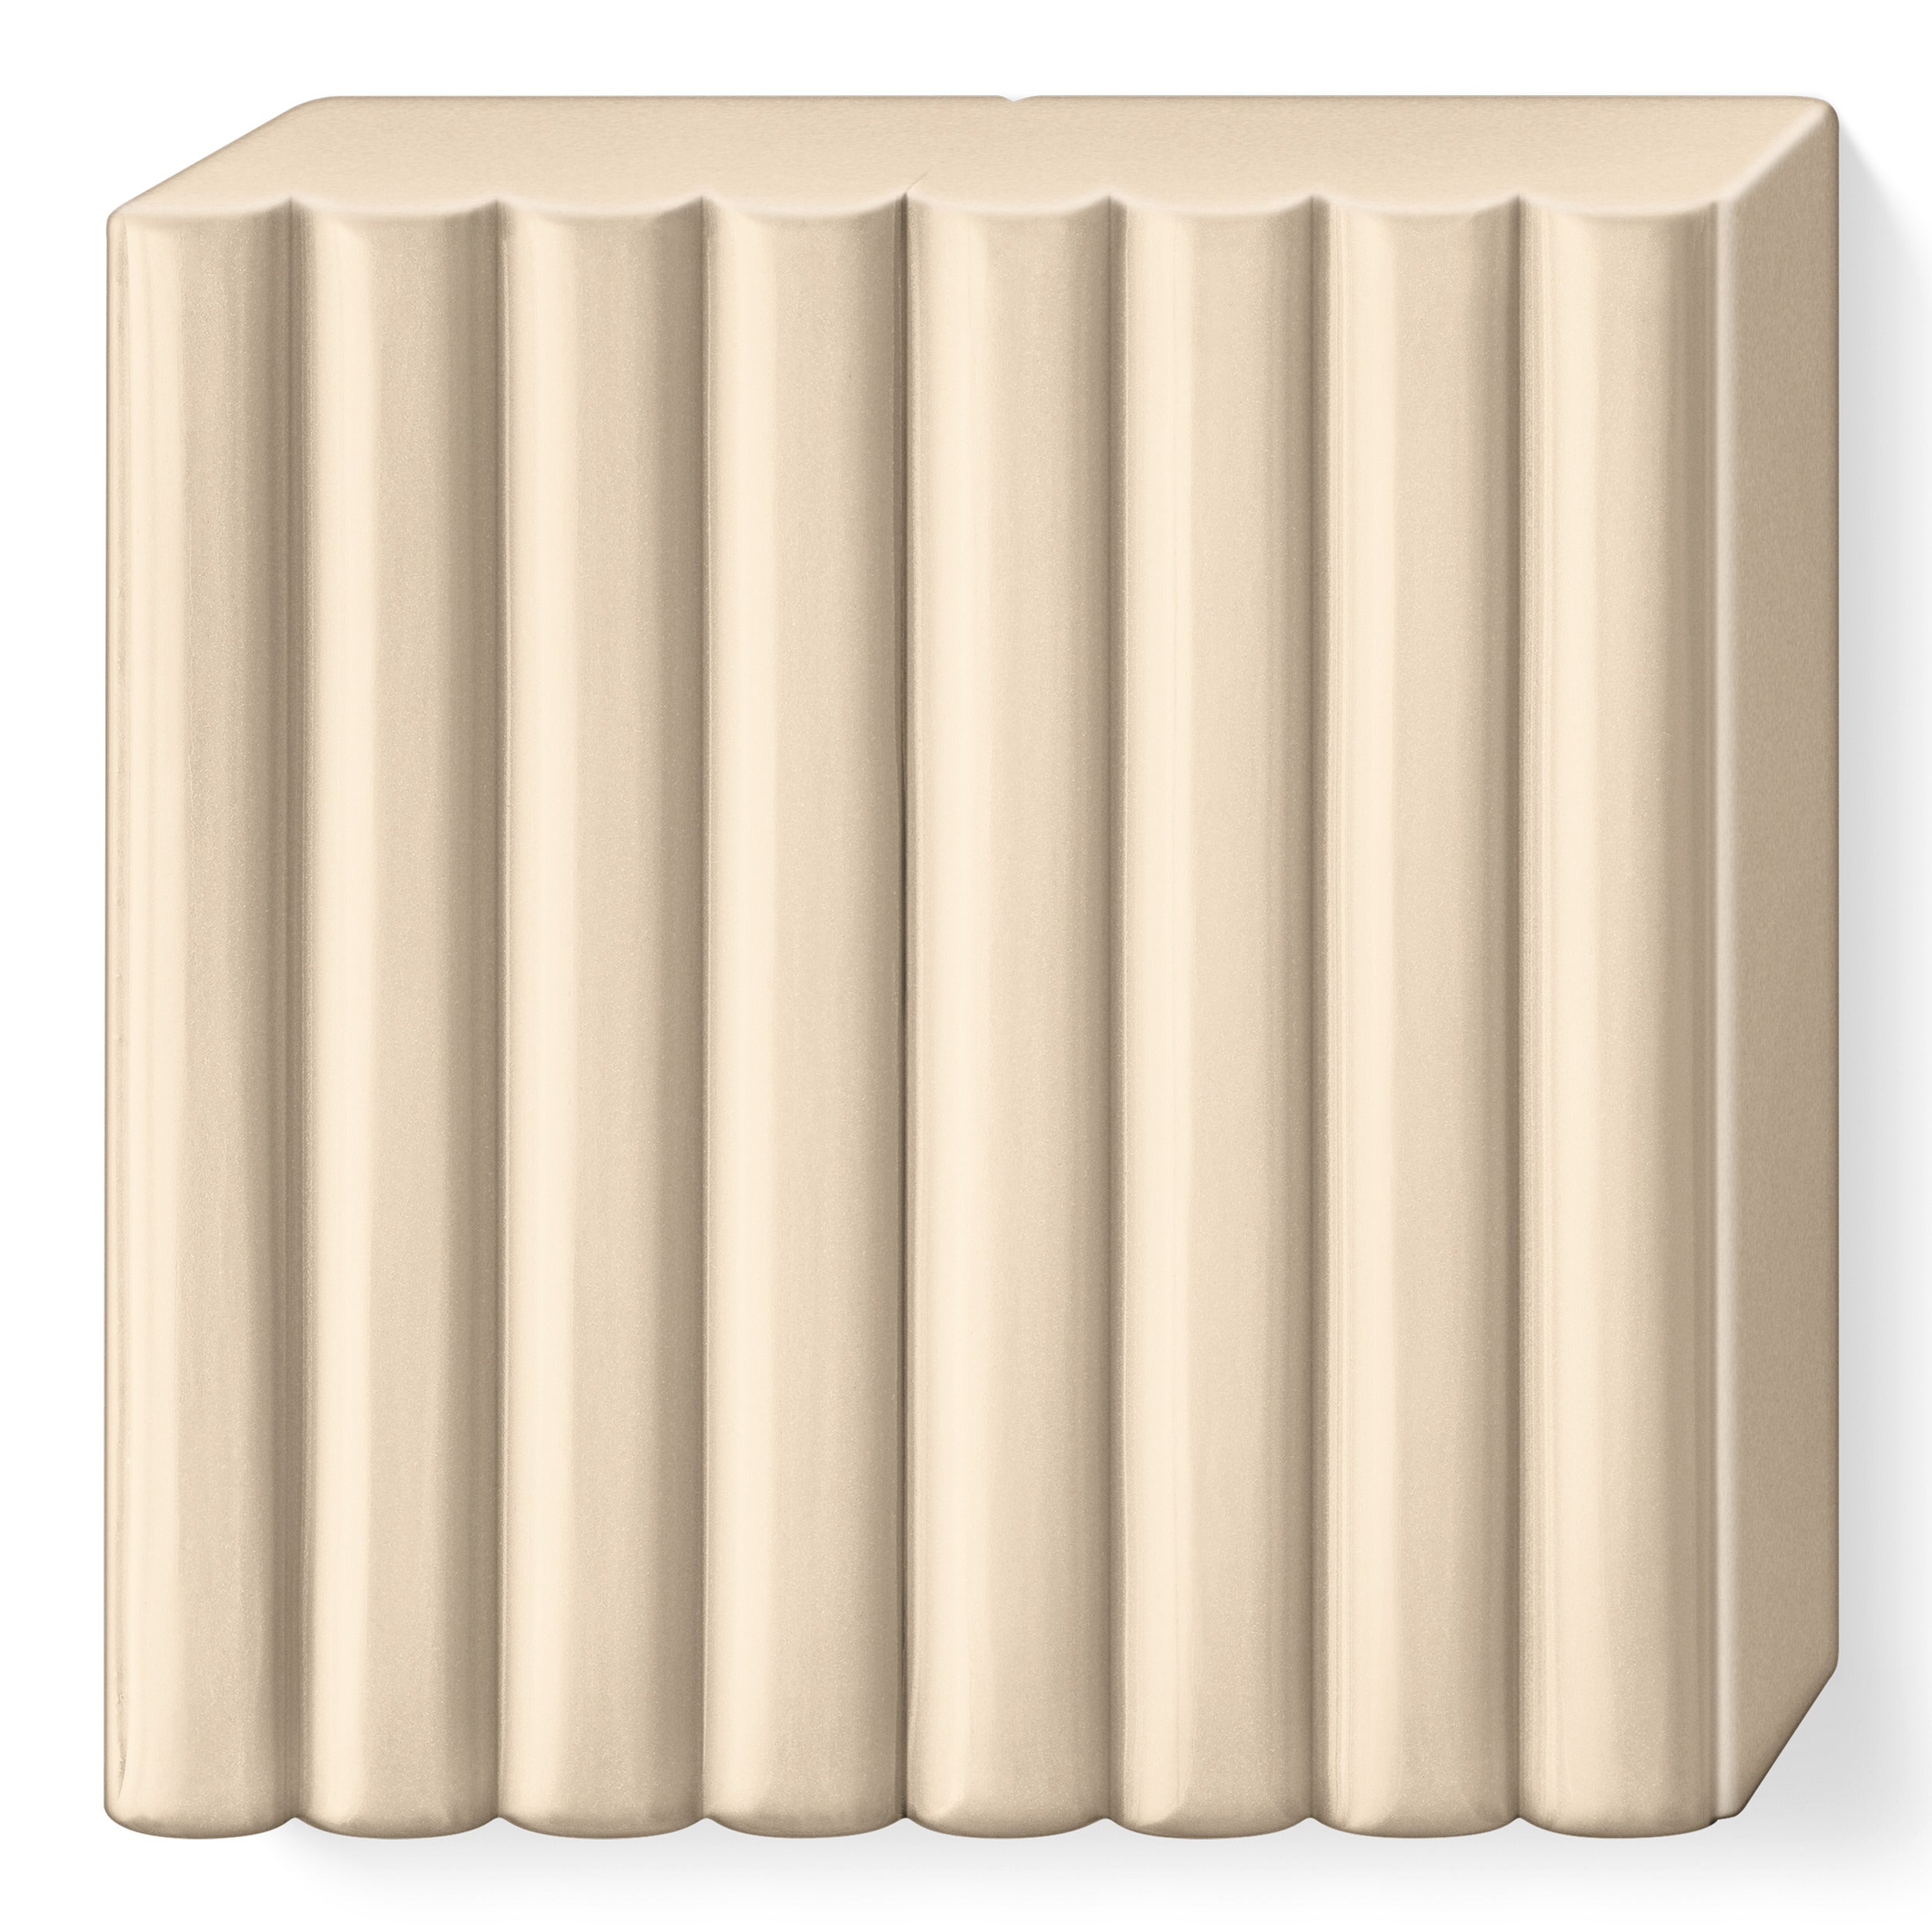 Fimo Soft Polymer Clay Standard Block 57g (2oz) - Sahara